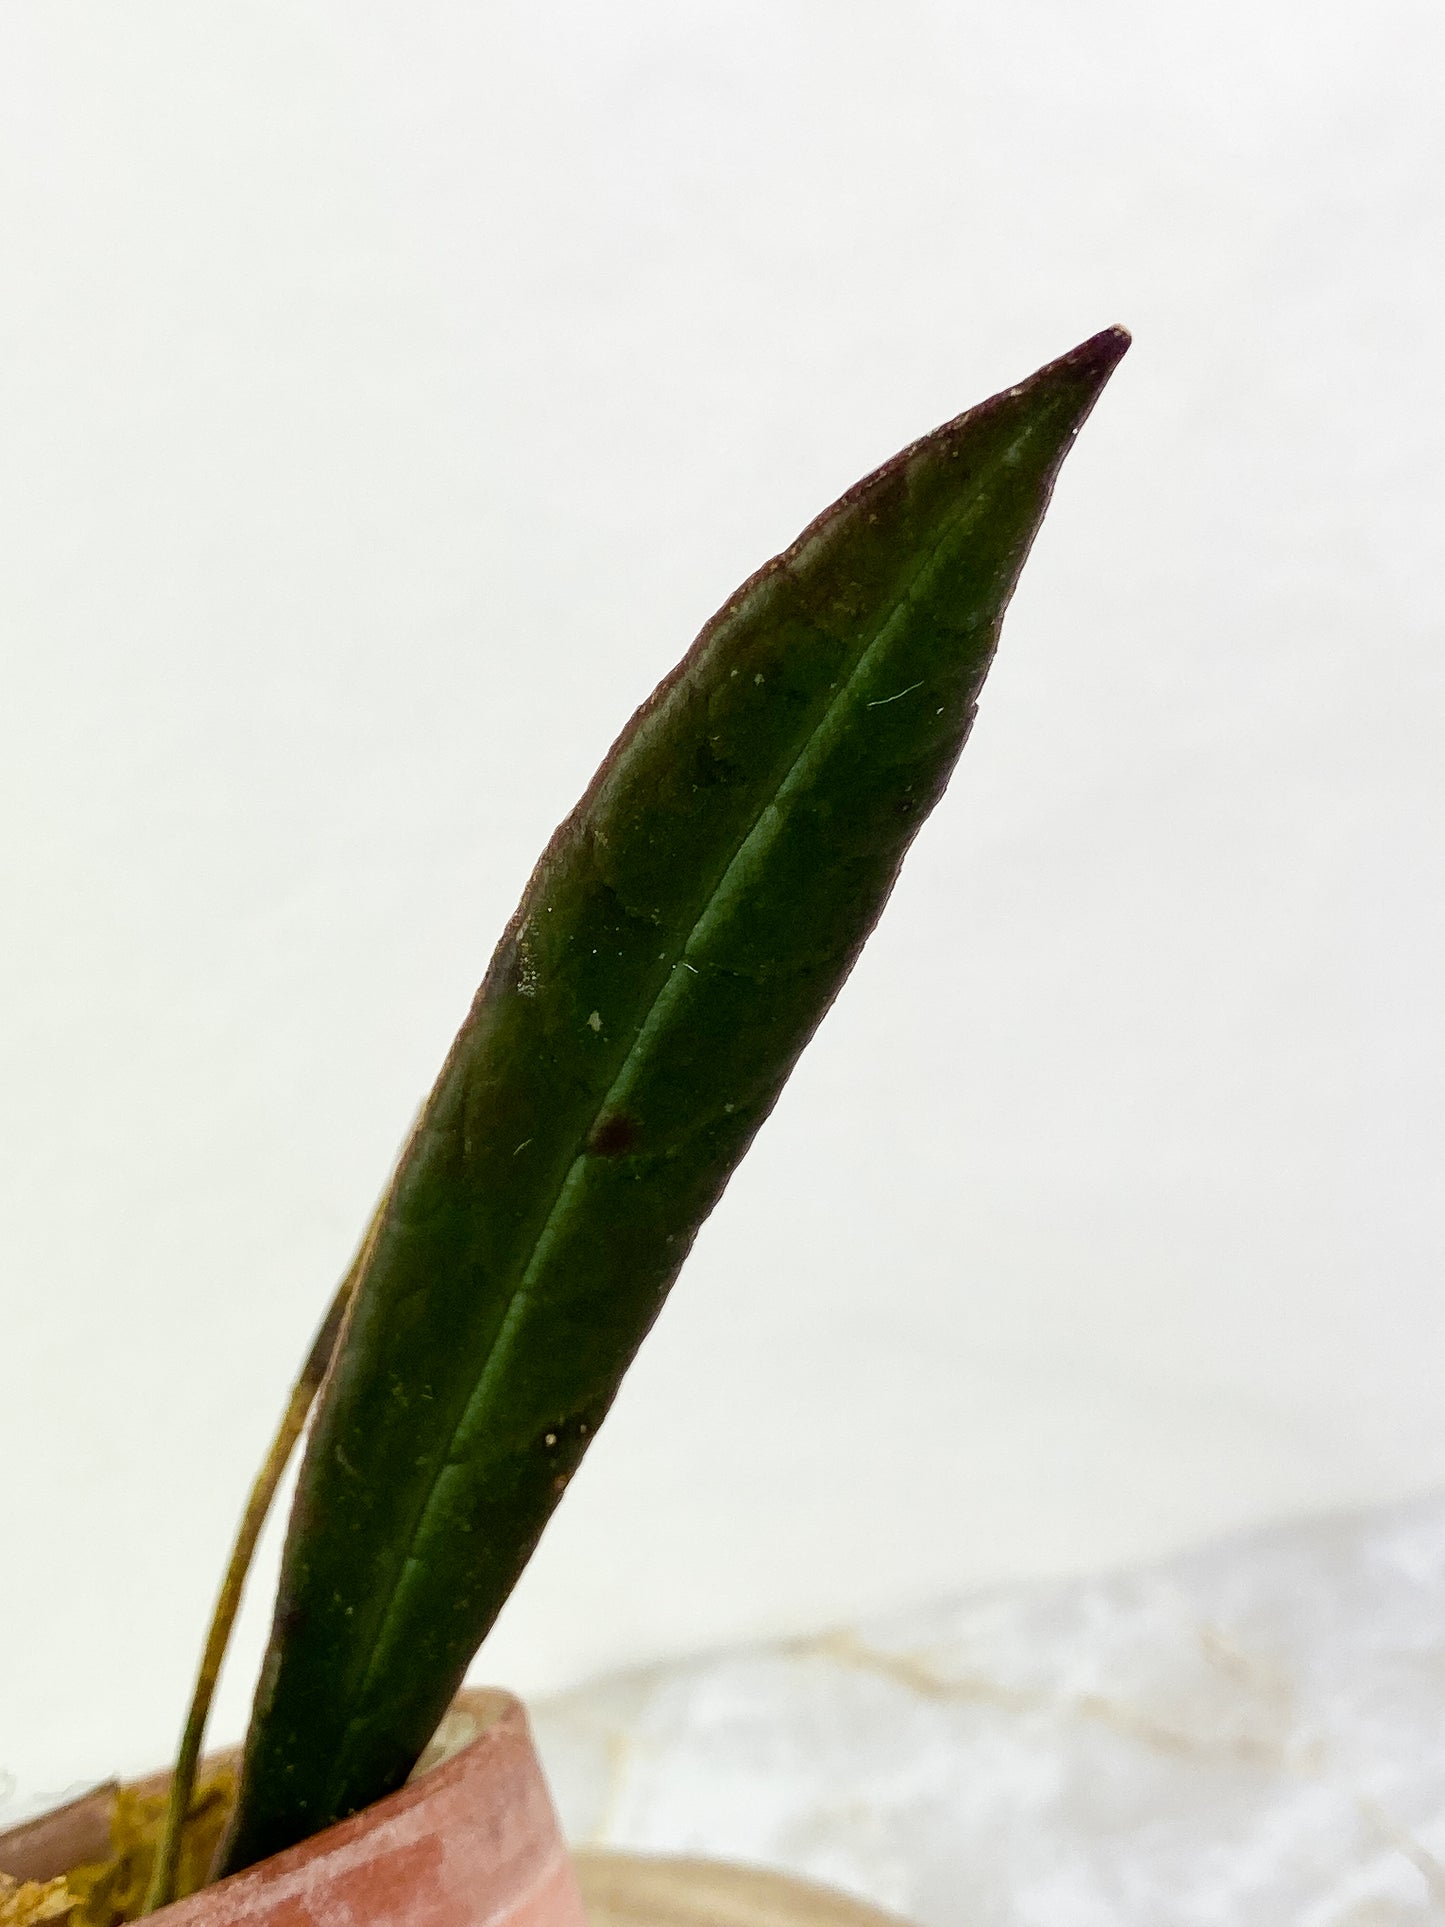 Hoya Sulaweisiana 1 leaf slightly rooted